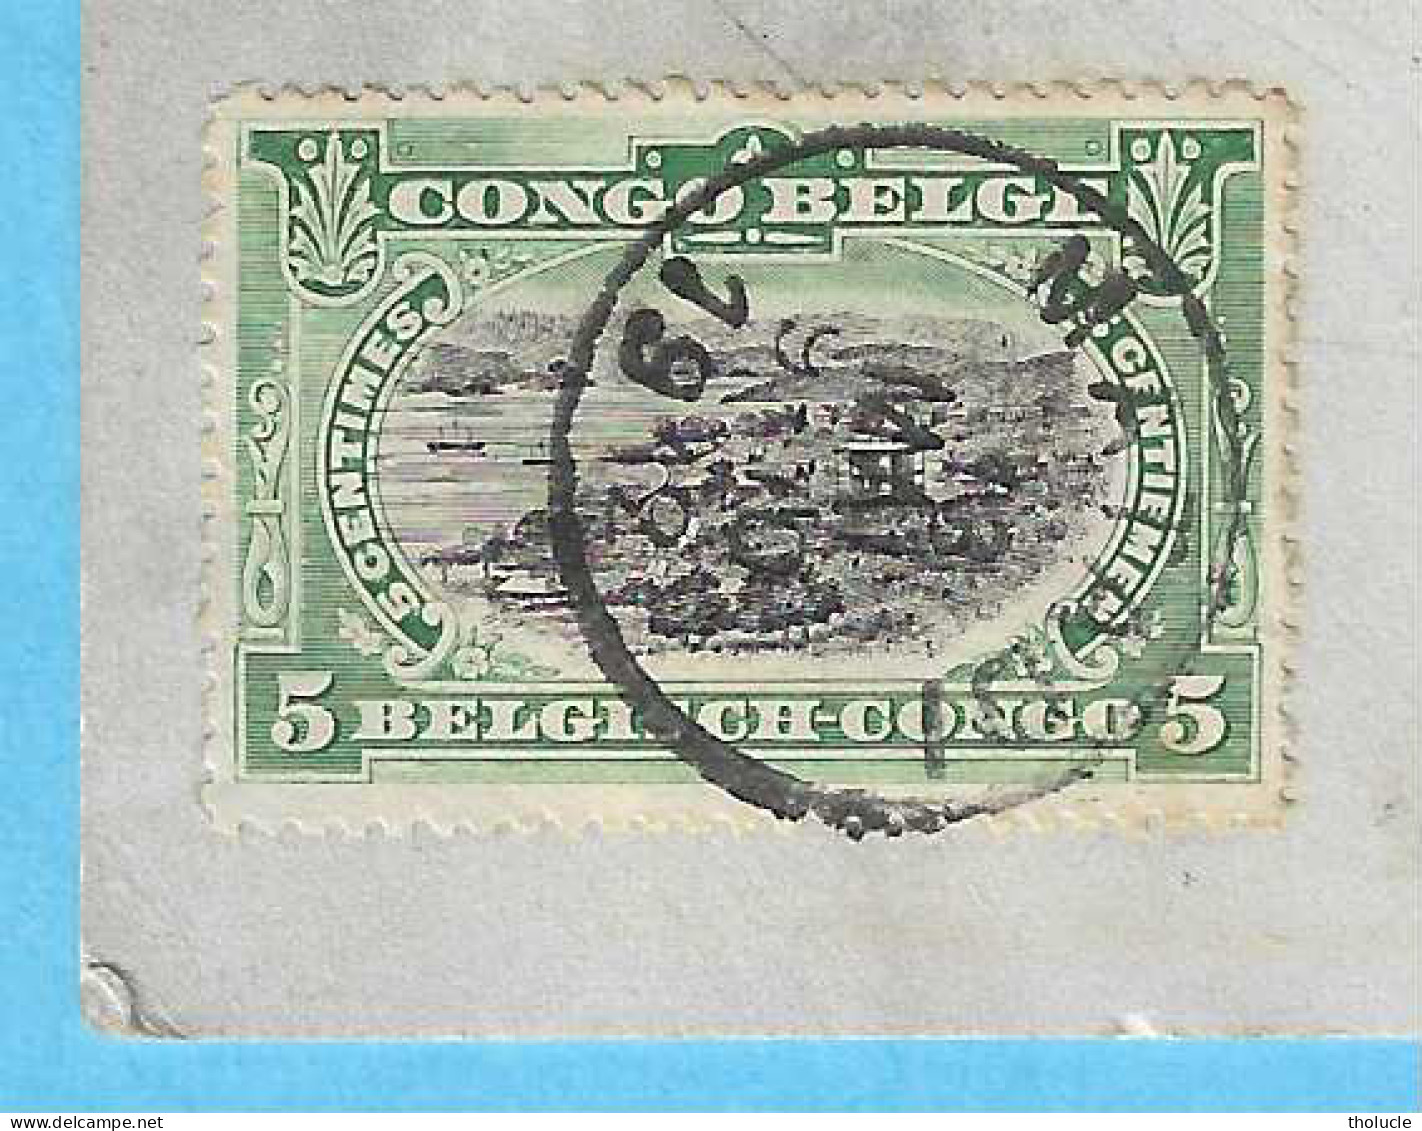 Timbre Type Mols-Belgisch-Congo Belge-Bilingue-1910-5c Vert-N°54-Cachet "Matadi-1912"CPA-SS.Elisabethville-Navire - Cartas & Documentos